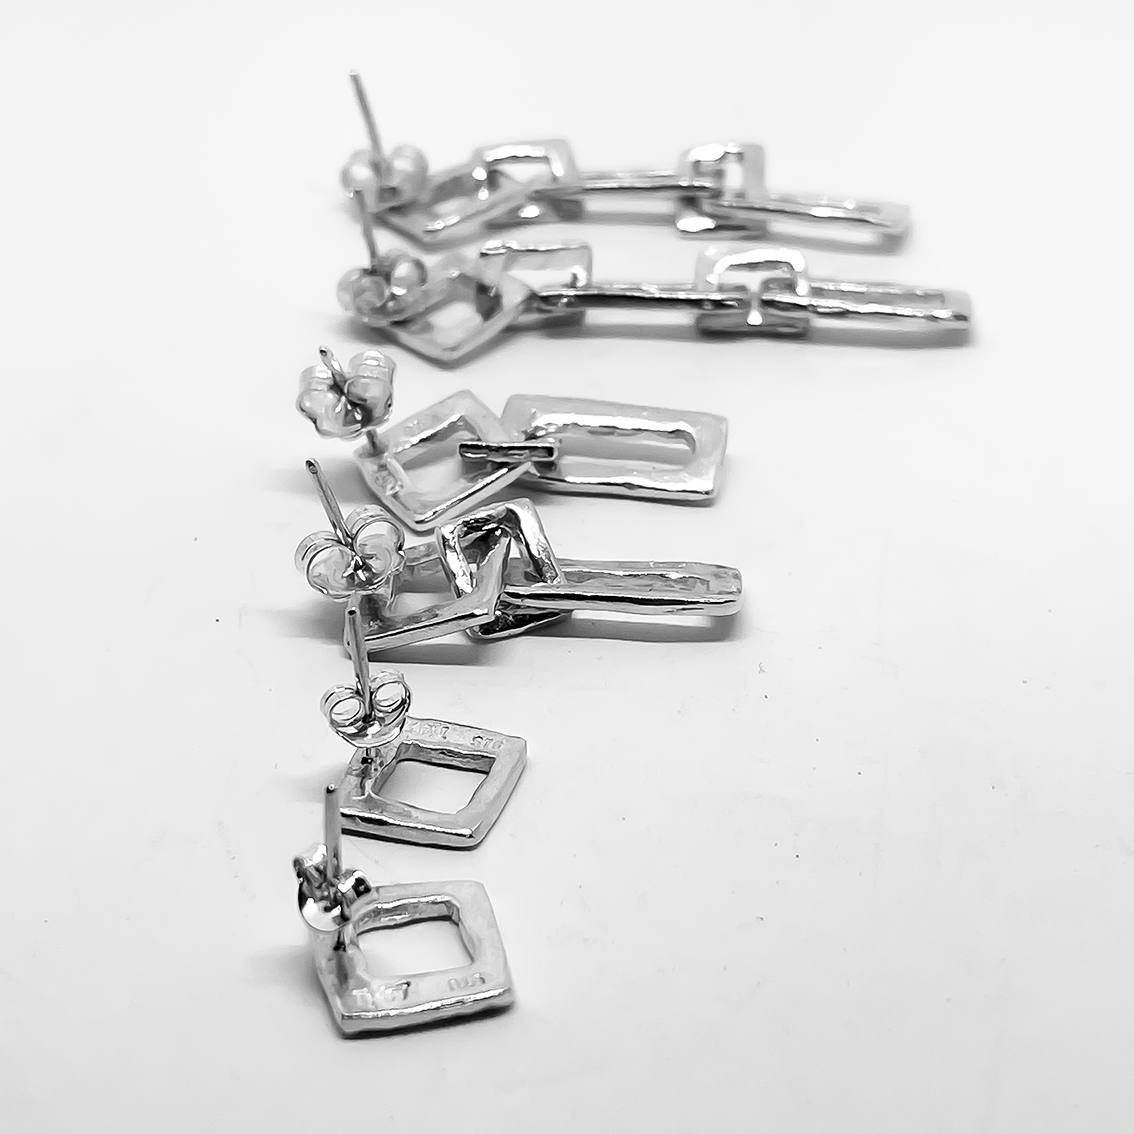 Modernist Earrings No. 5 - Geometric Cutout Square Stud Earrings in Sterling Silver